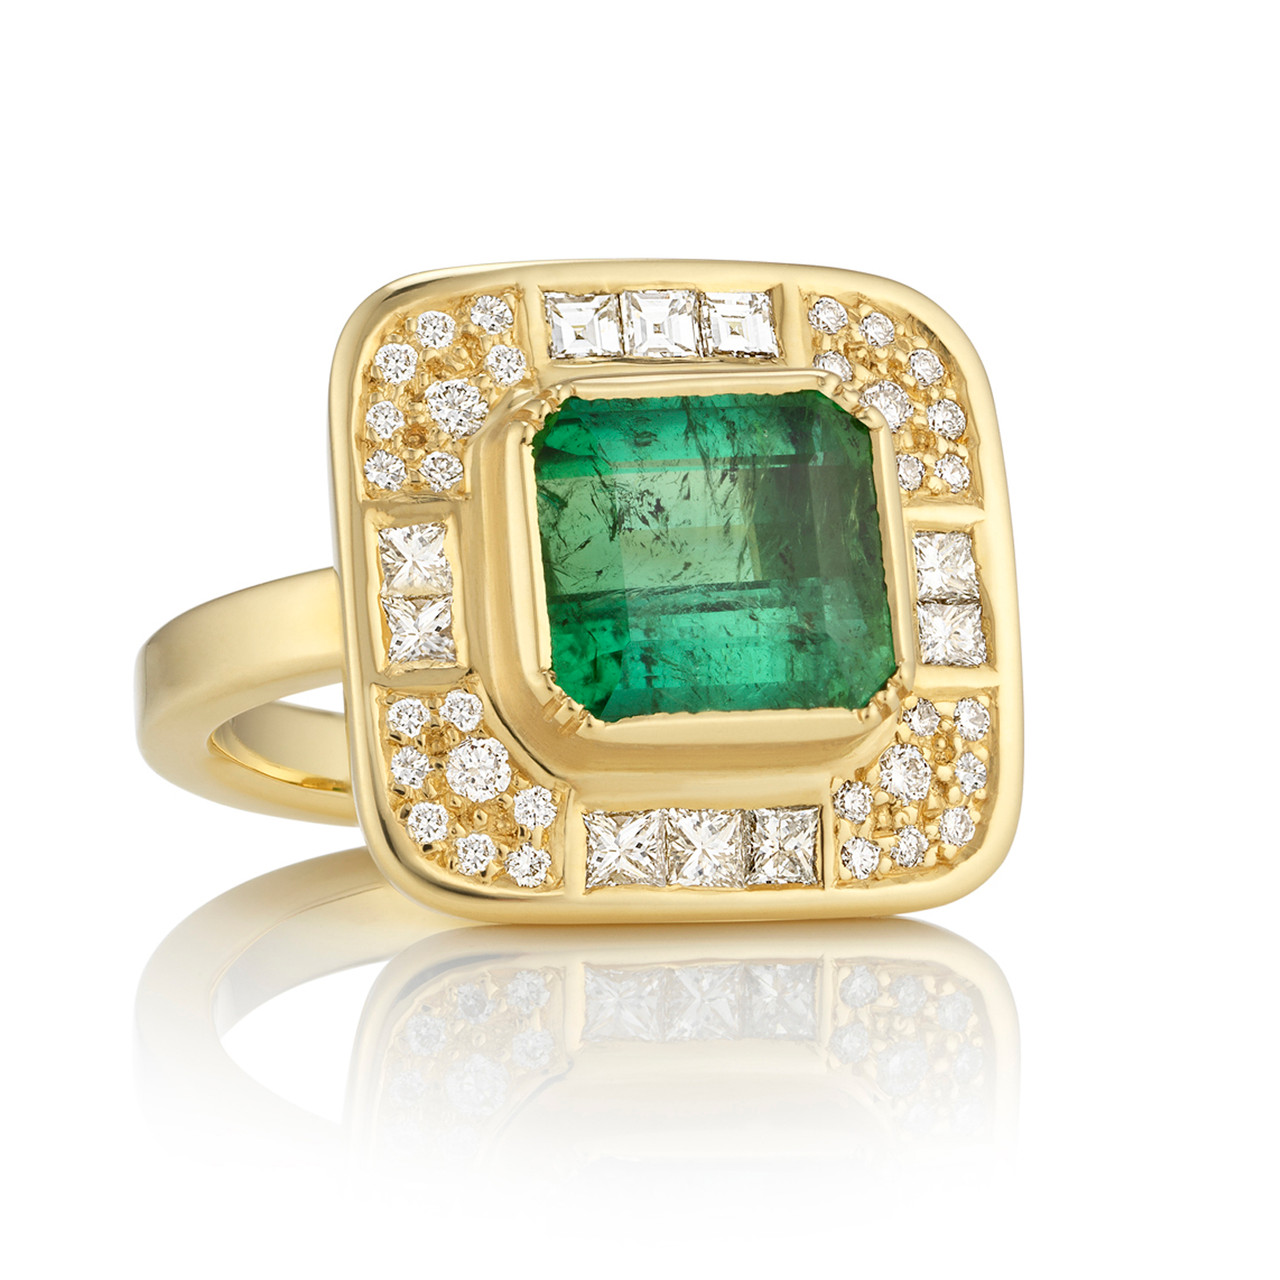 Mondrian Emerald Diamond Ring, Brooke Gregson, tomfoolery